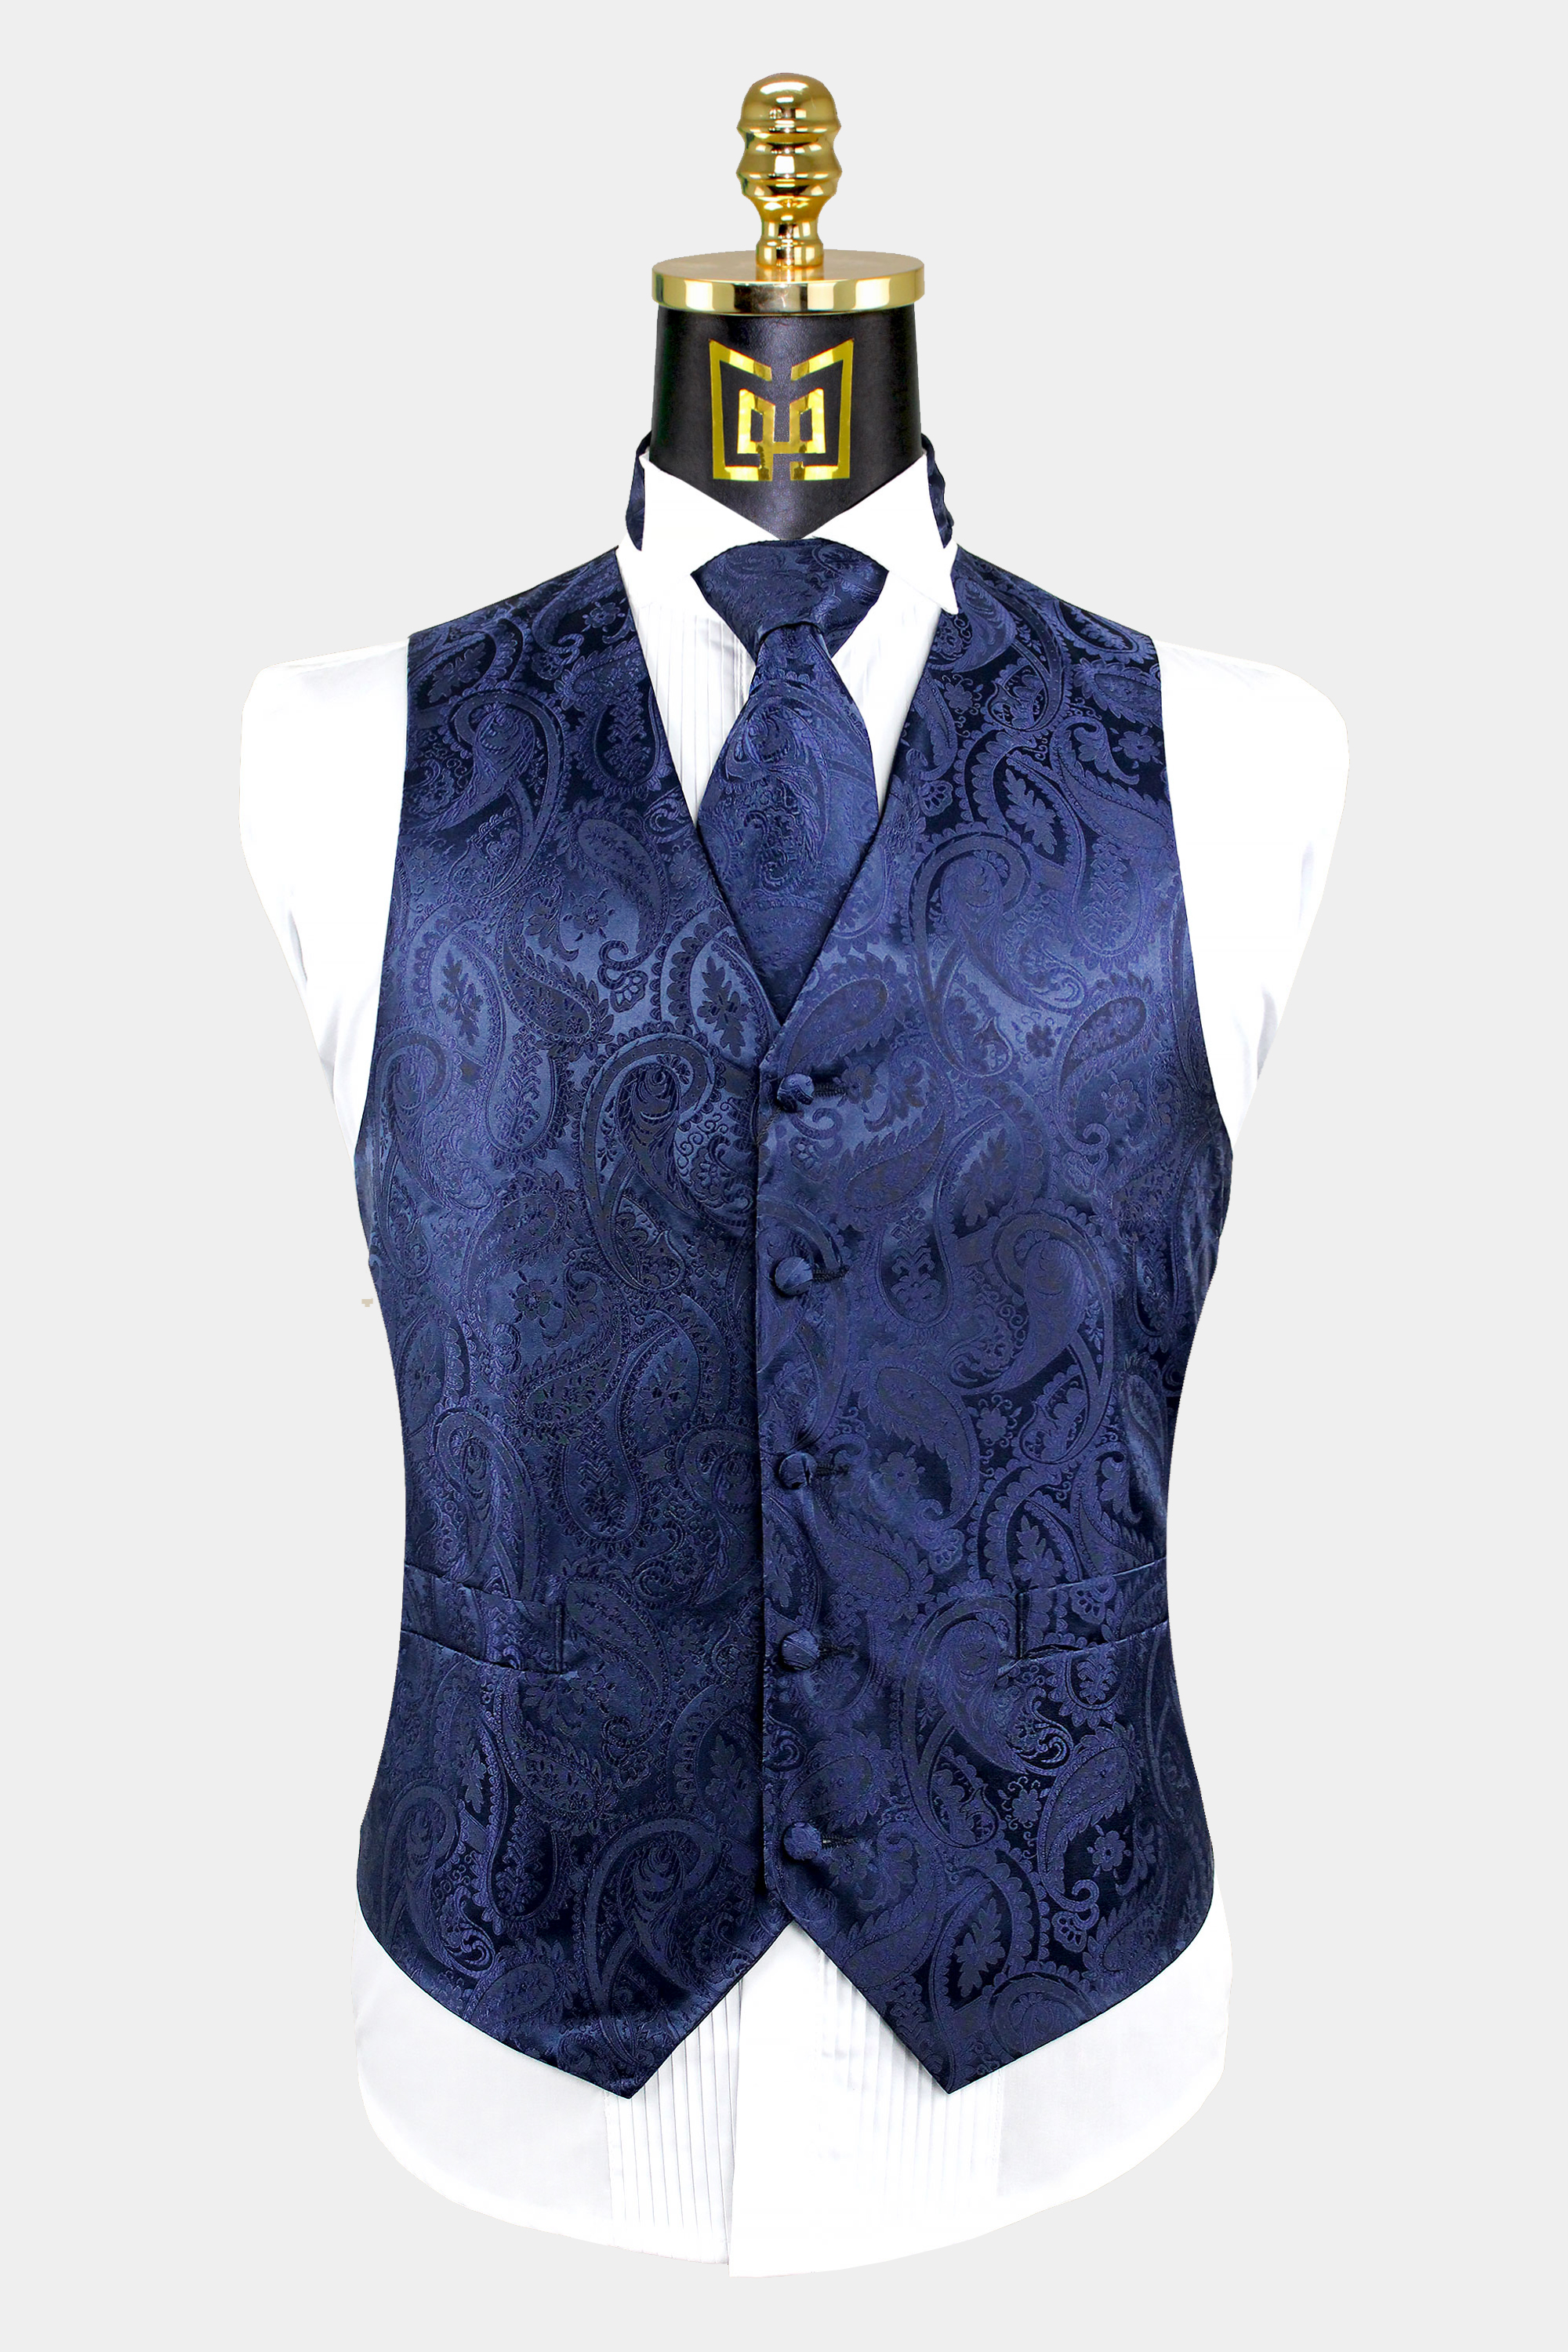 New Brand Q Men's Paisley Vest Tuxedo Waistcoat_Necktie Charcoal formal prom 